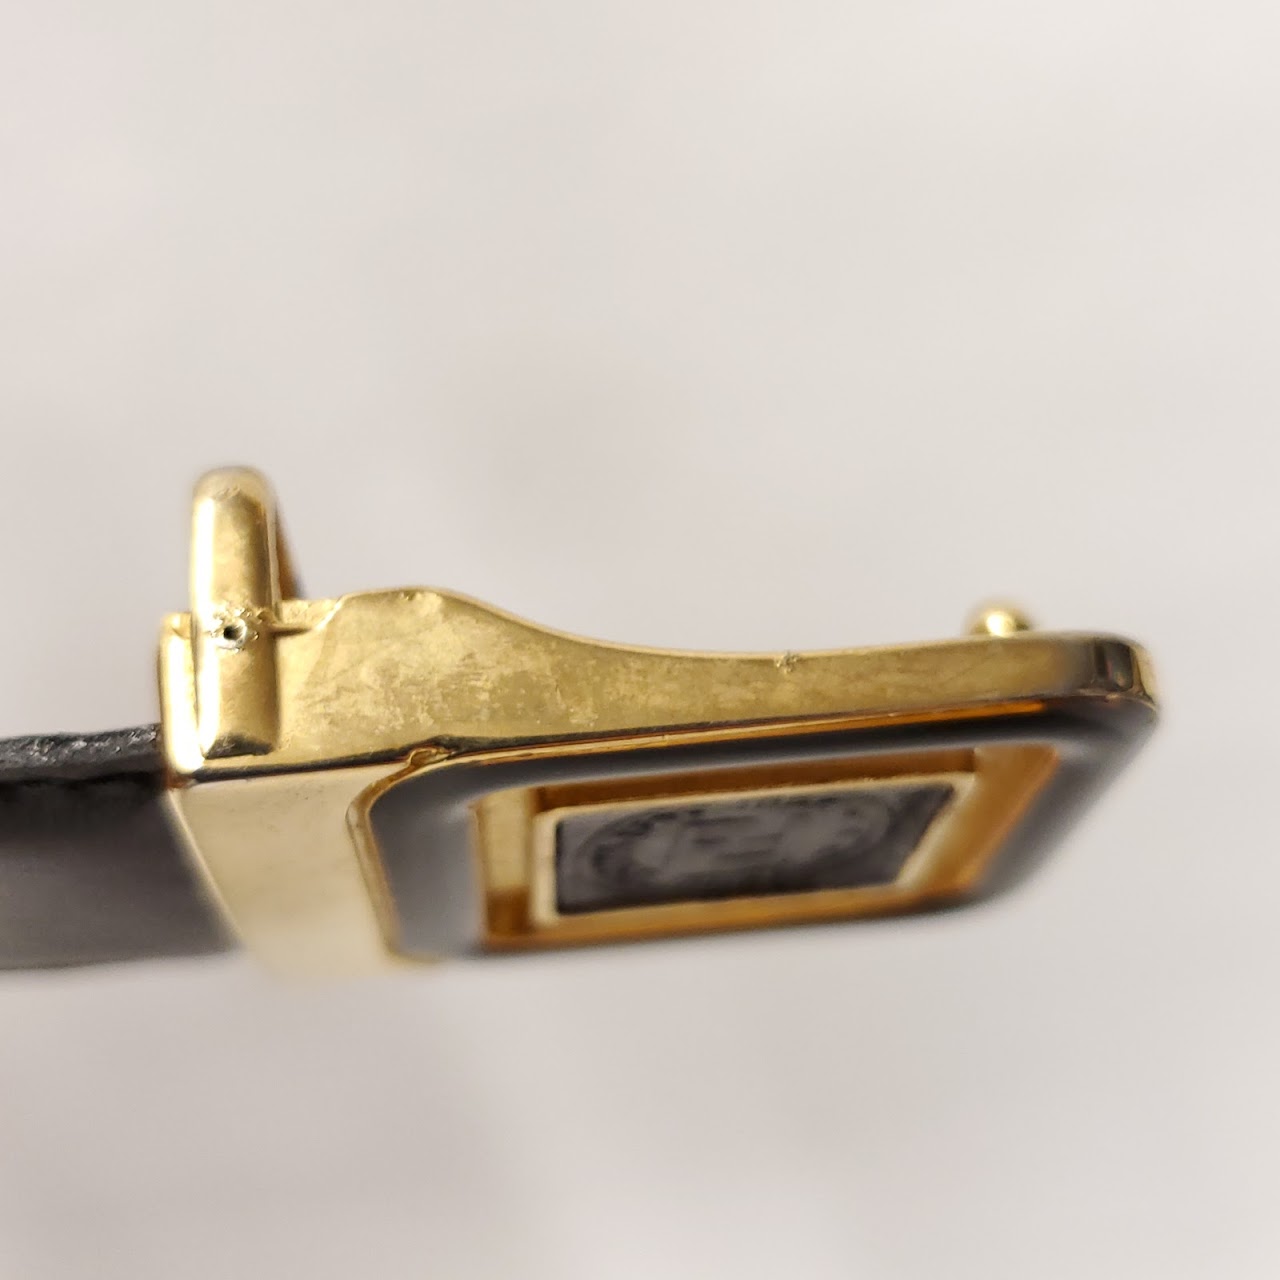 Fendi Vintage Reversible Belt